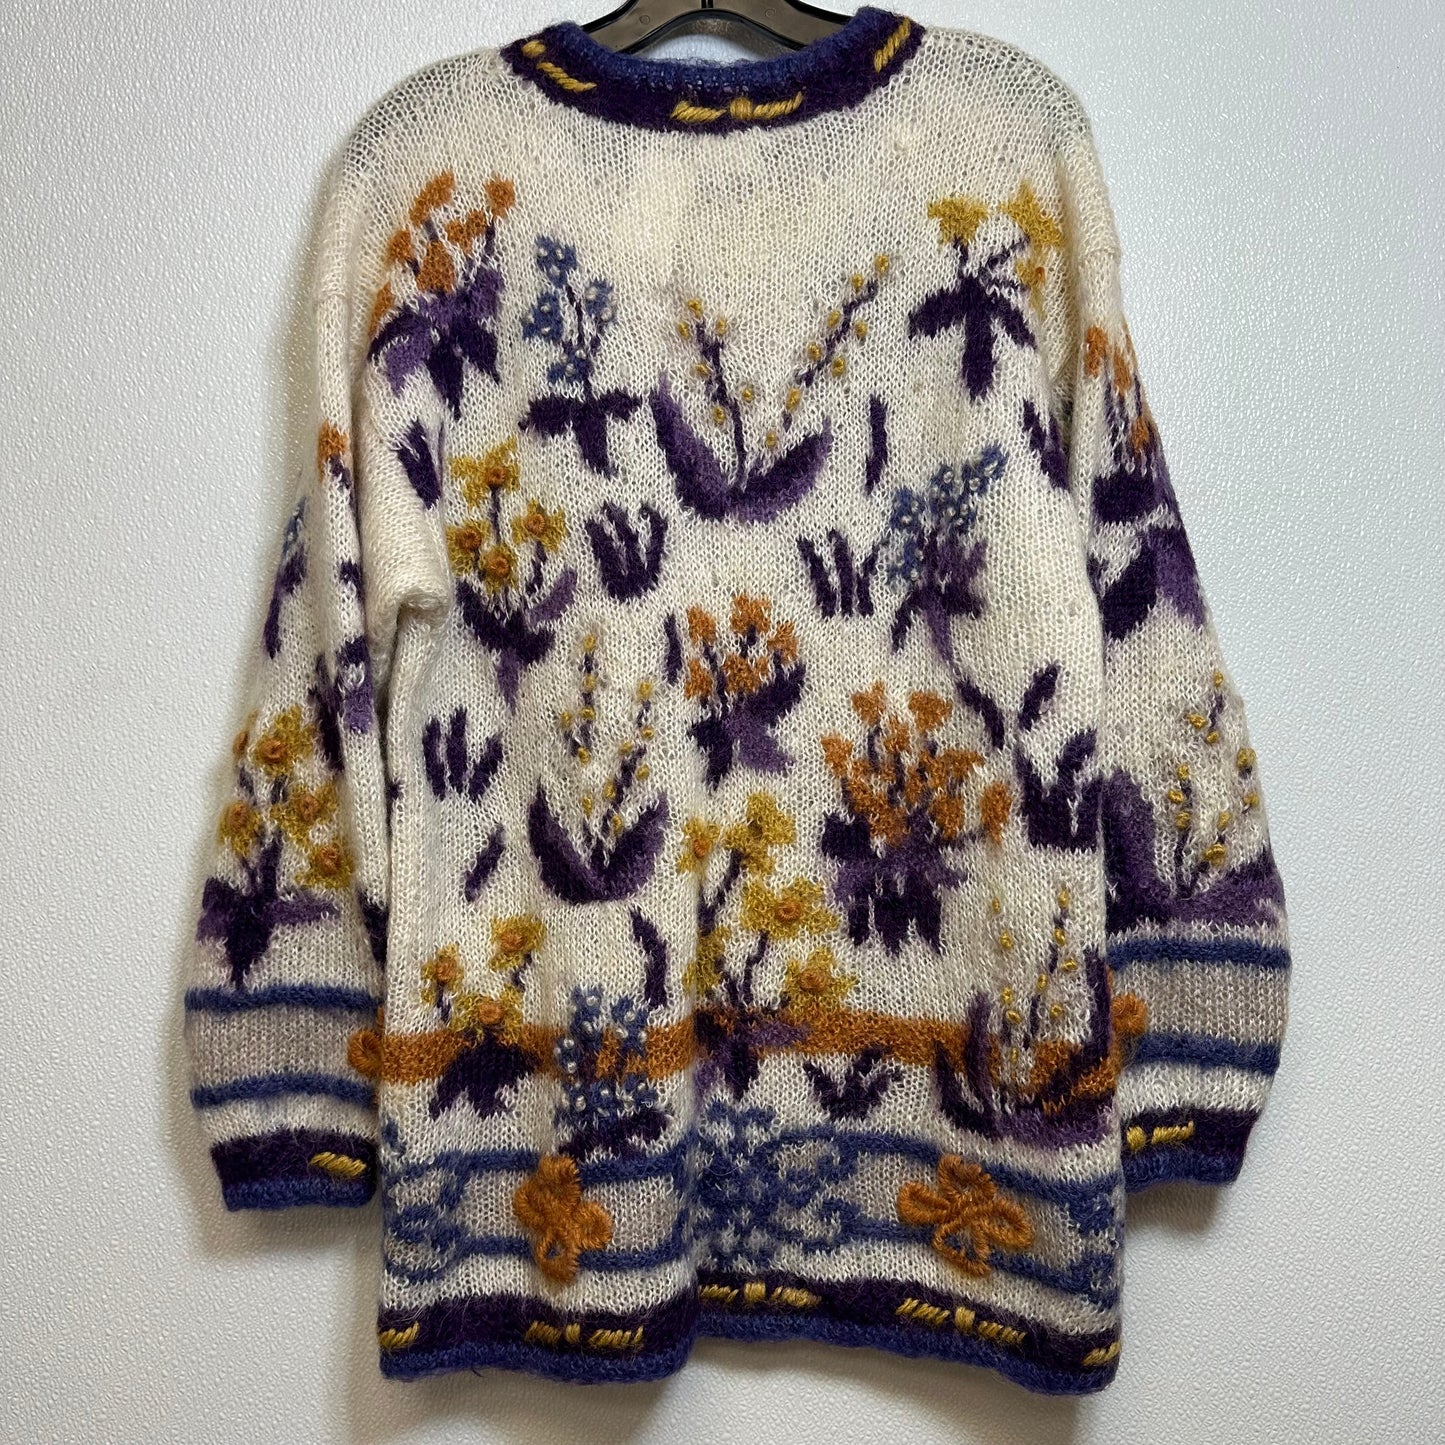 Sweater By JENNIFER REED   Size: S